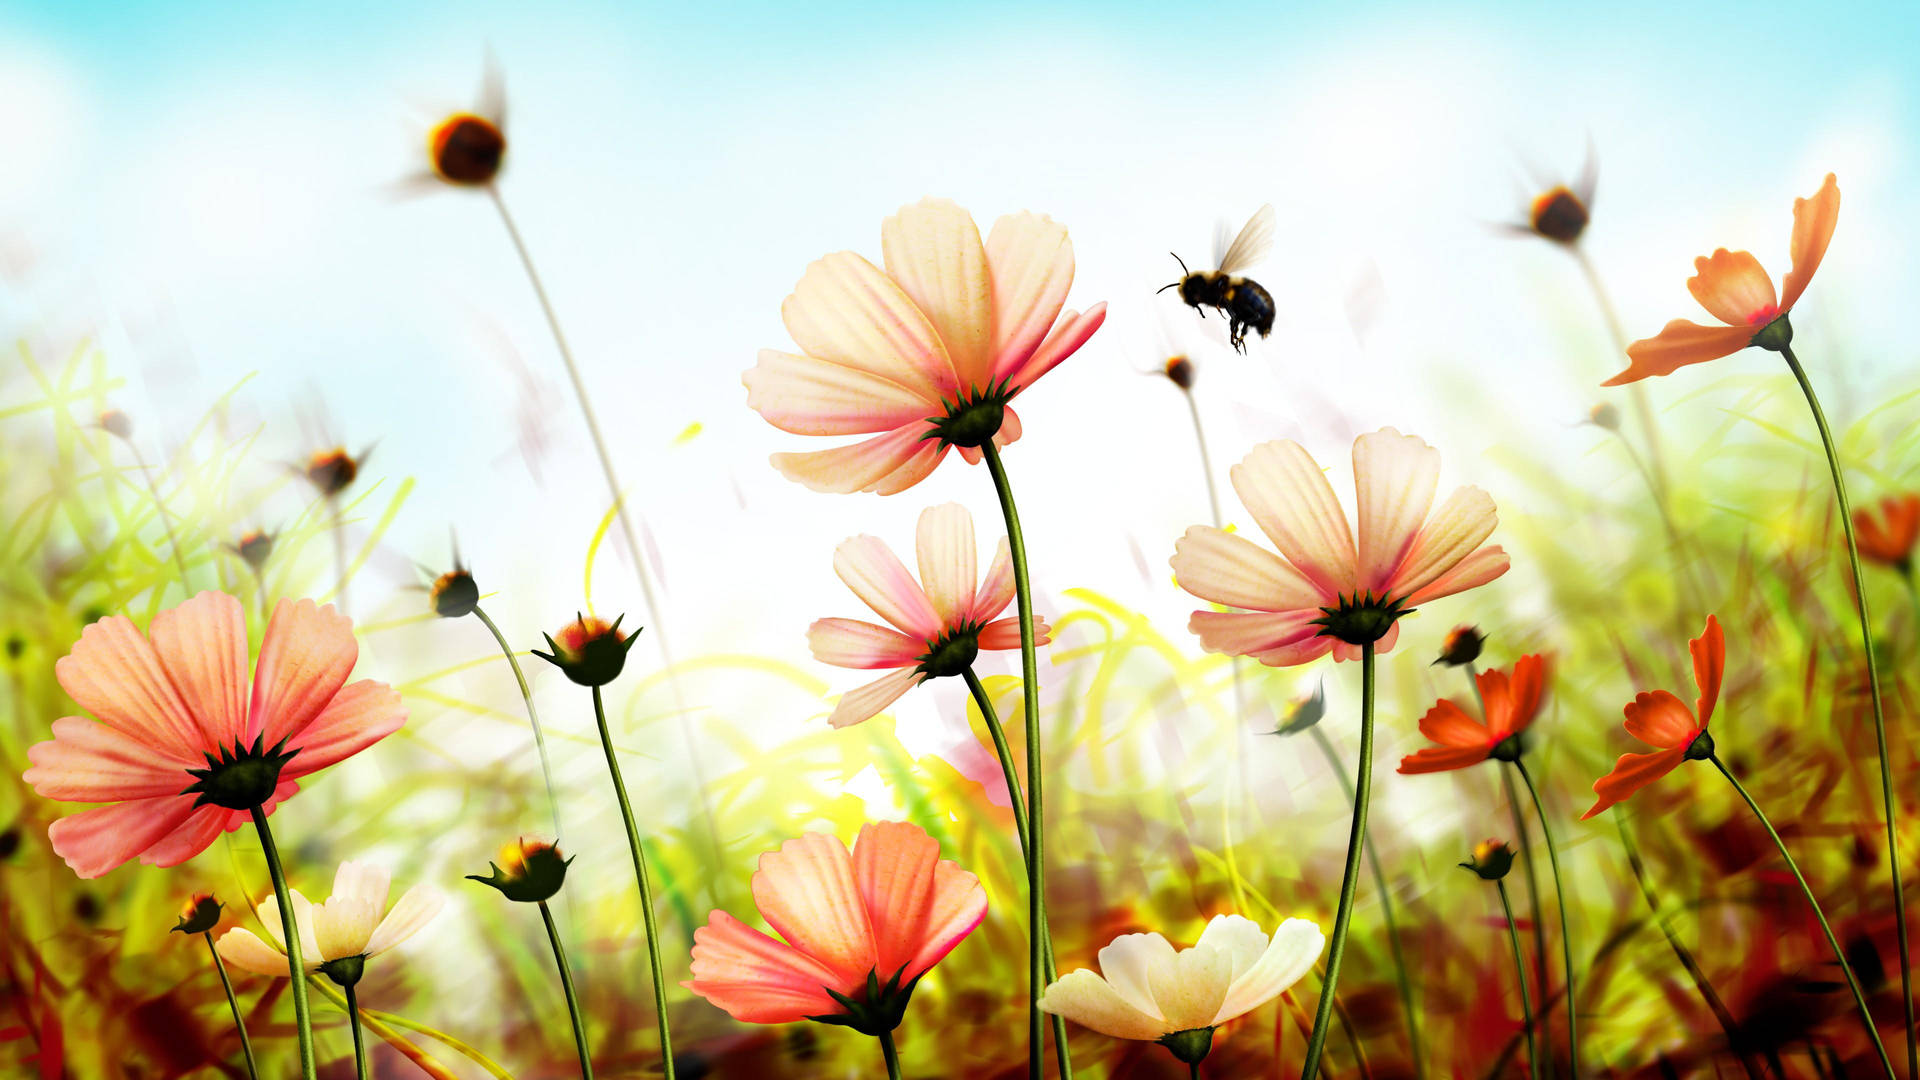 Spring Flowers Digital Art Background